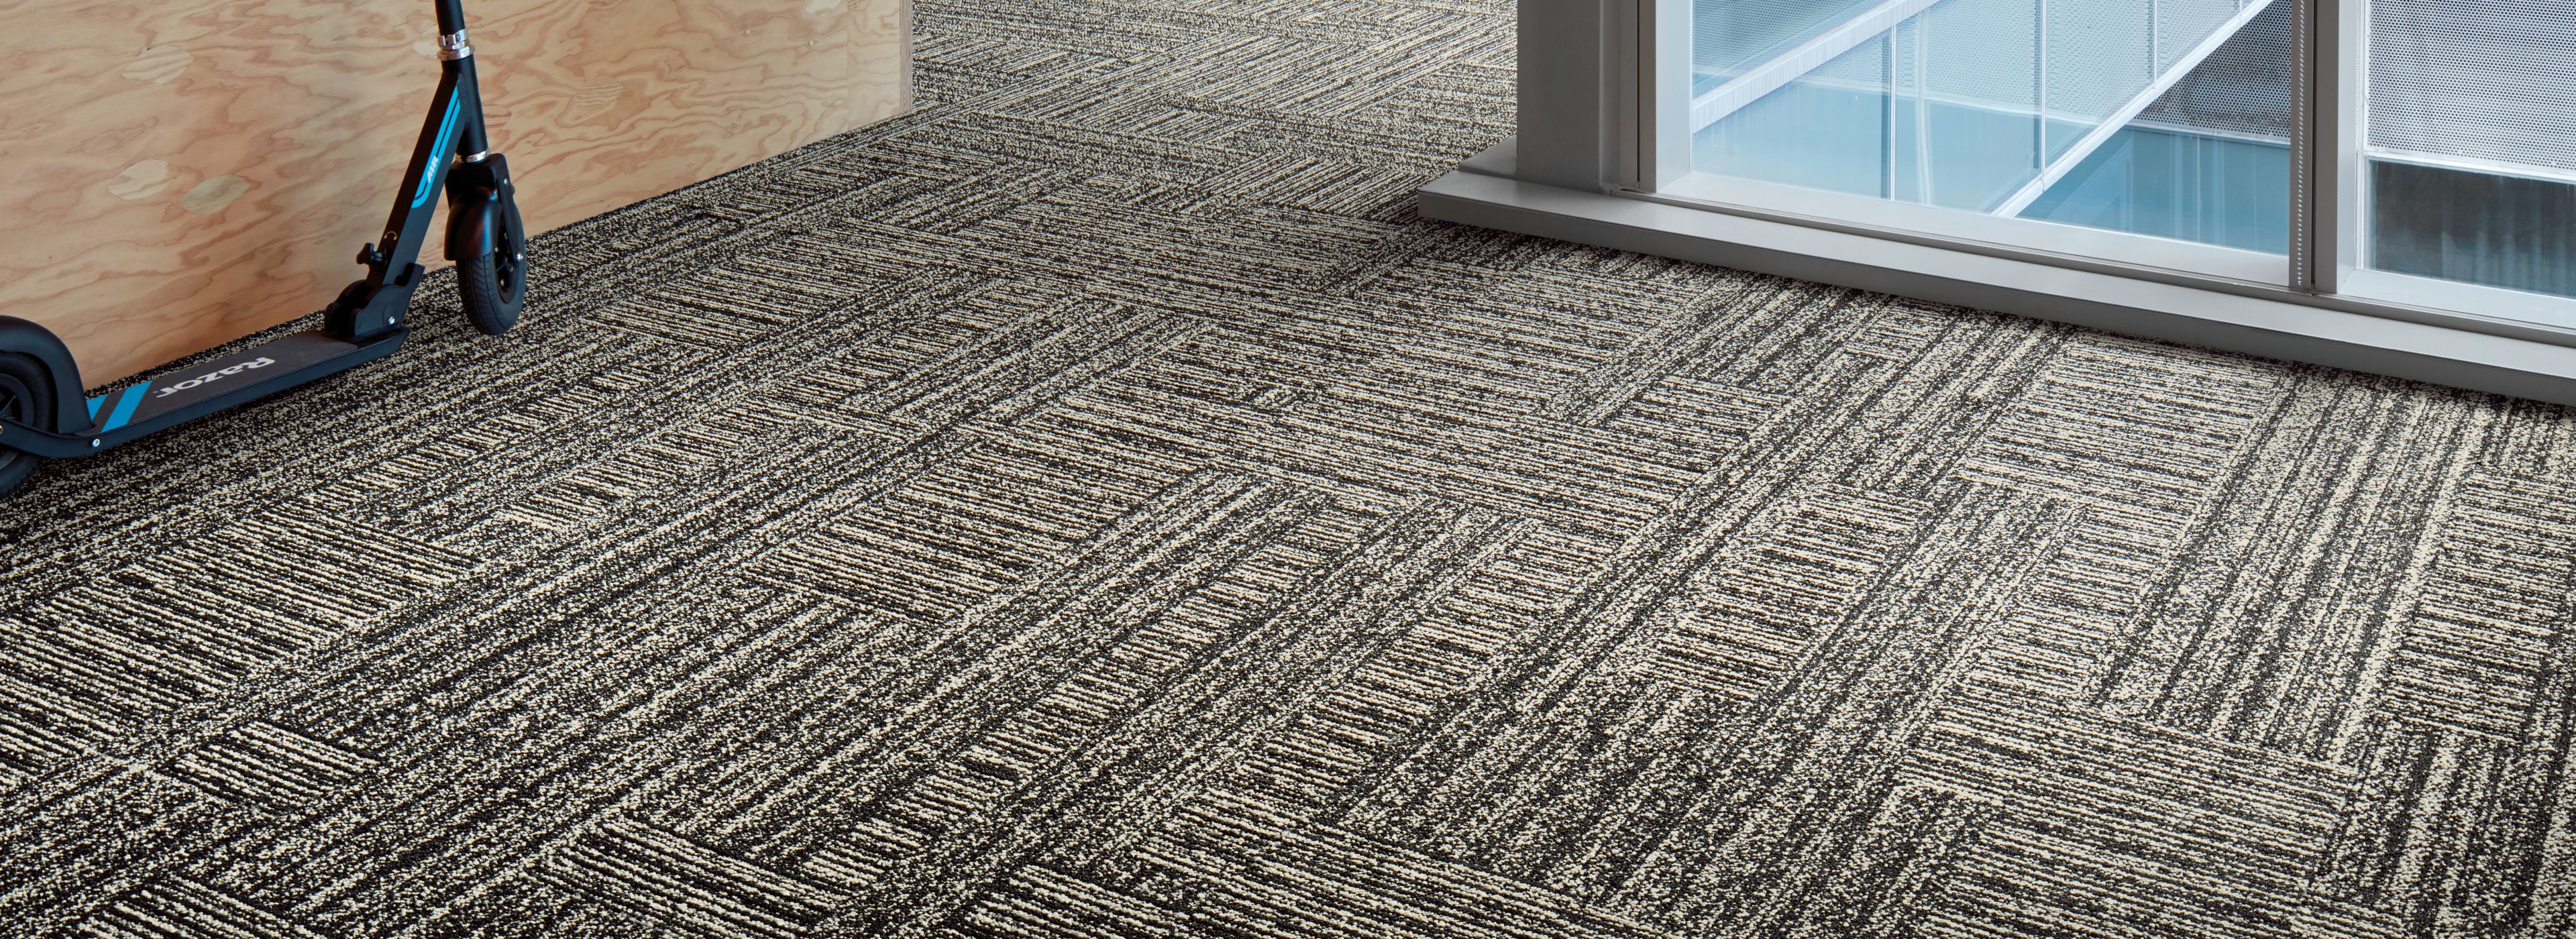 Interface Decibel and Hard Drive plank carpet tile in small area with glass windows número de imagen 1